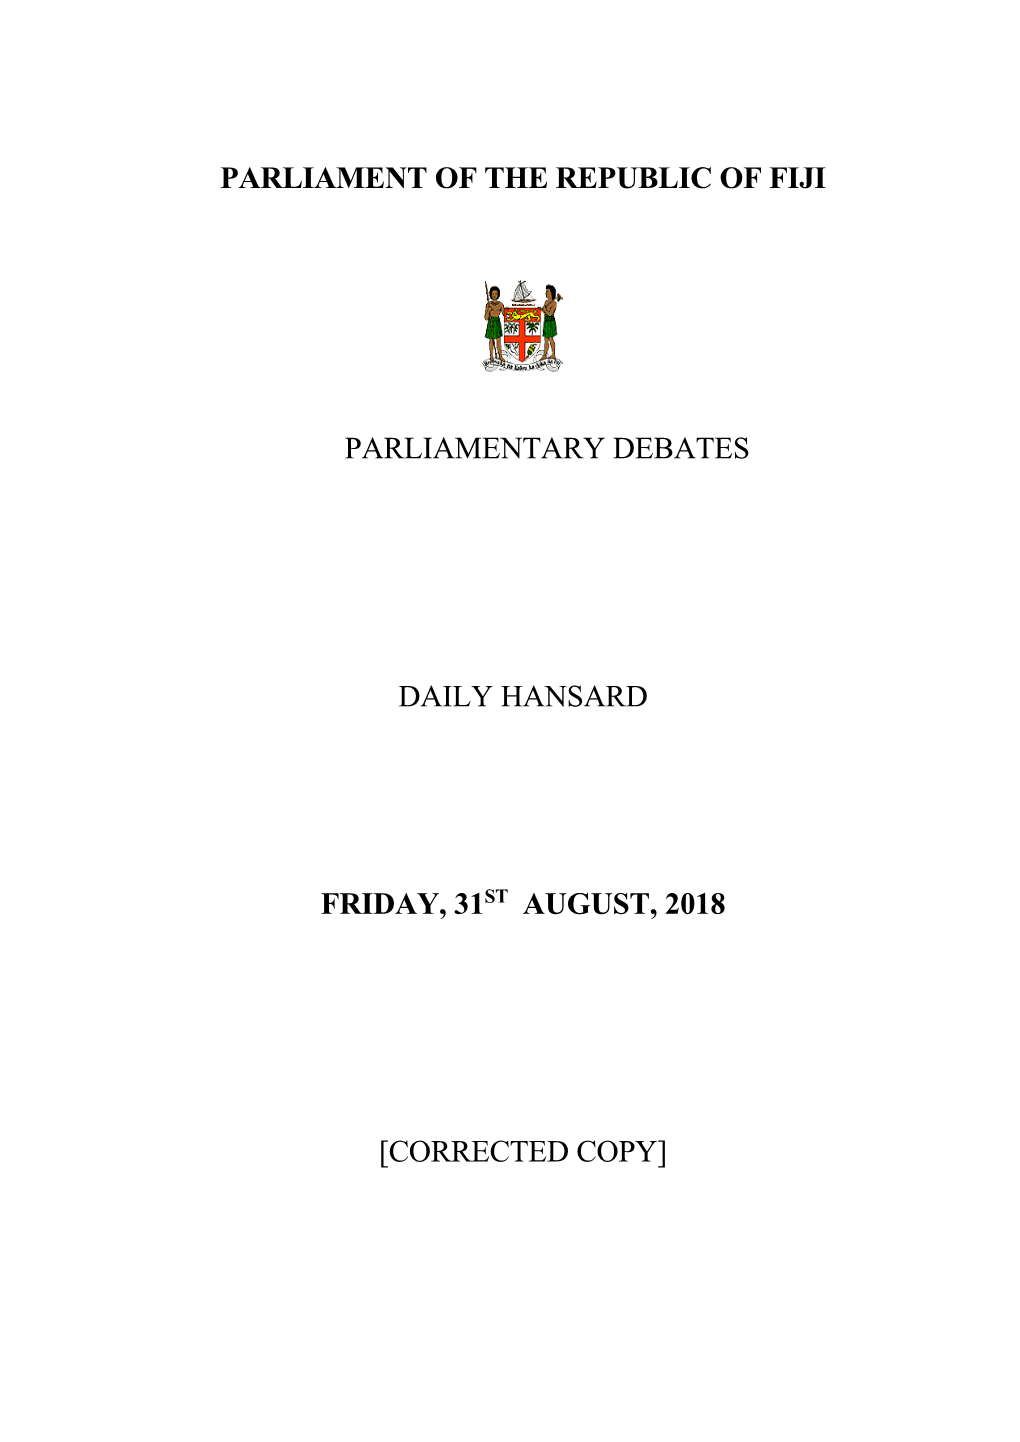 Parliament of the Republic of Fiji Parliamentary Debates Daily Hansard Friday, 31St August, 2018 [Corrected Copy]